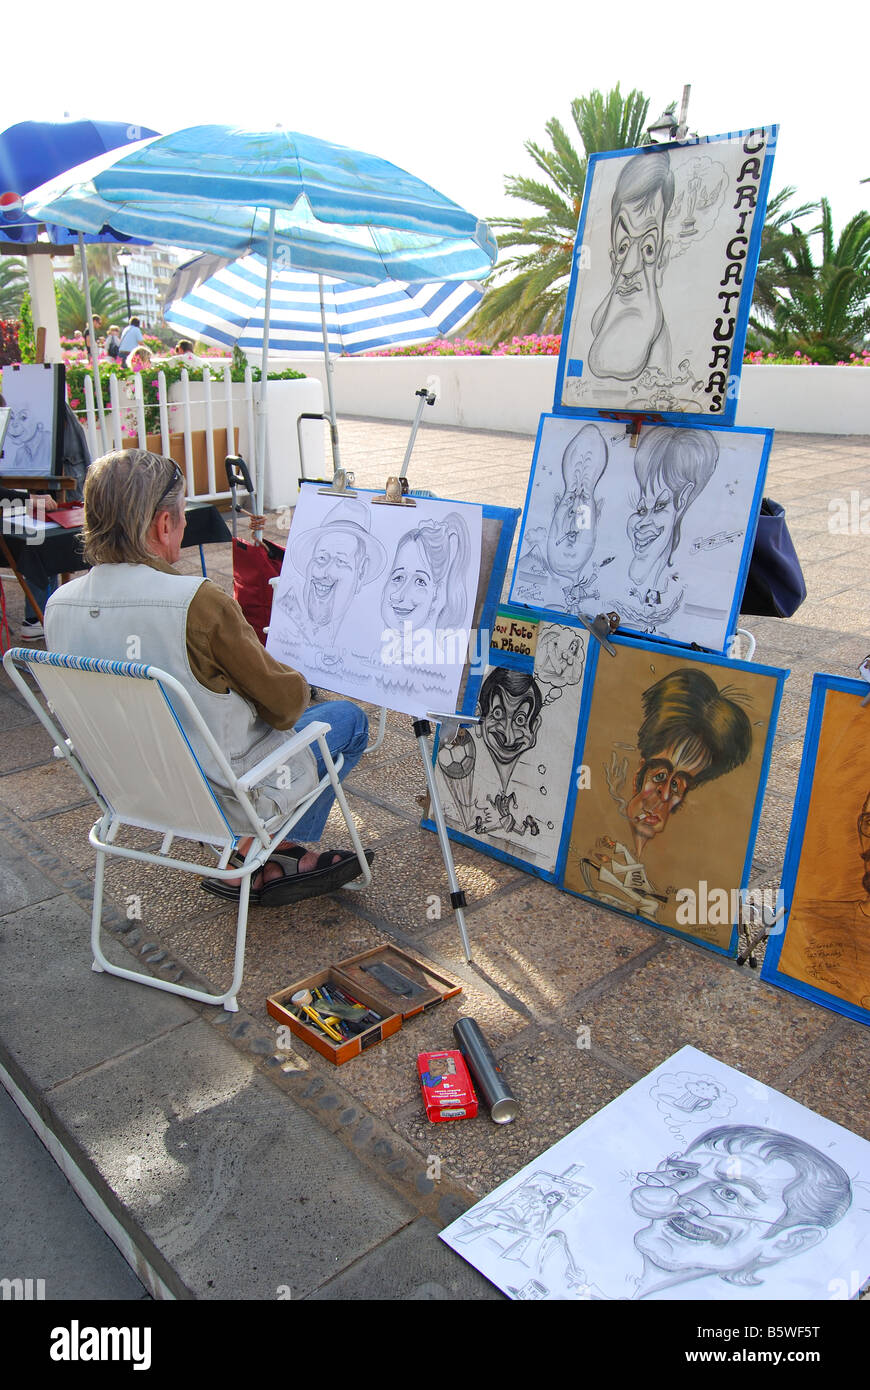 Artiste caricature sur la promenade, Puerto de La Cruz, Tenerife, Canaries, Espagne Banque D'Images